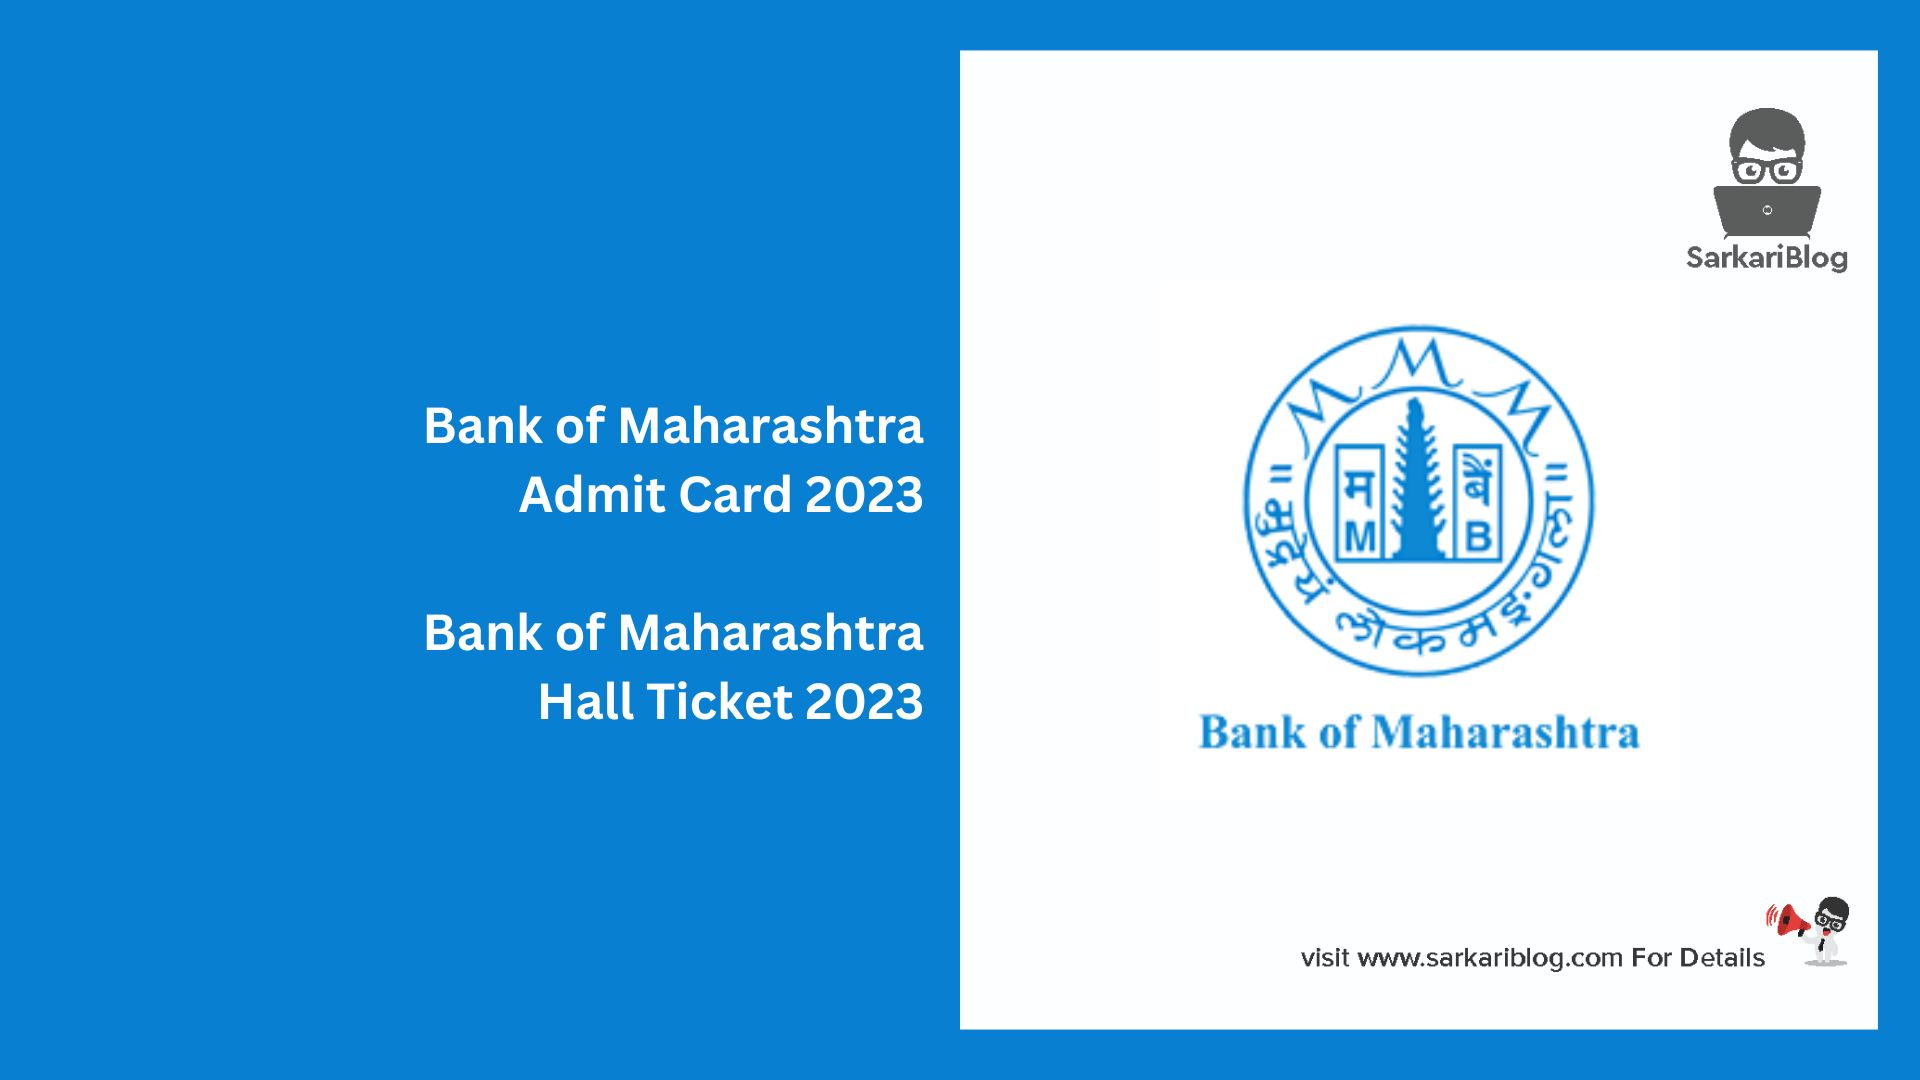 Bank of Maharashtra Admit Card 2023